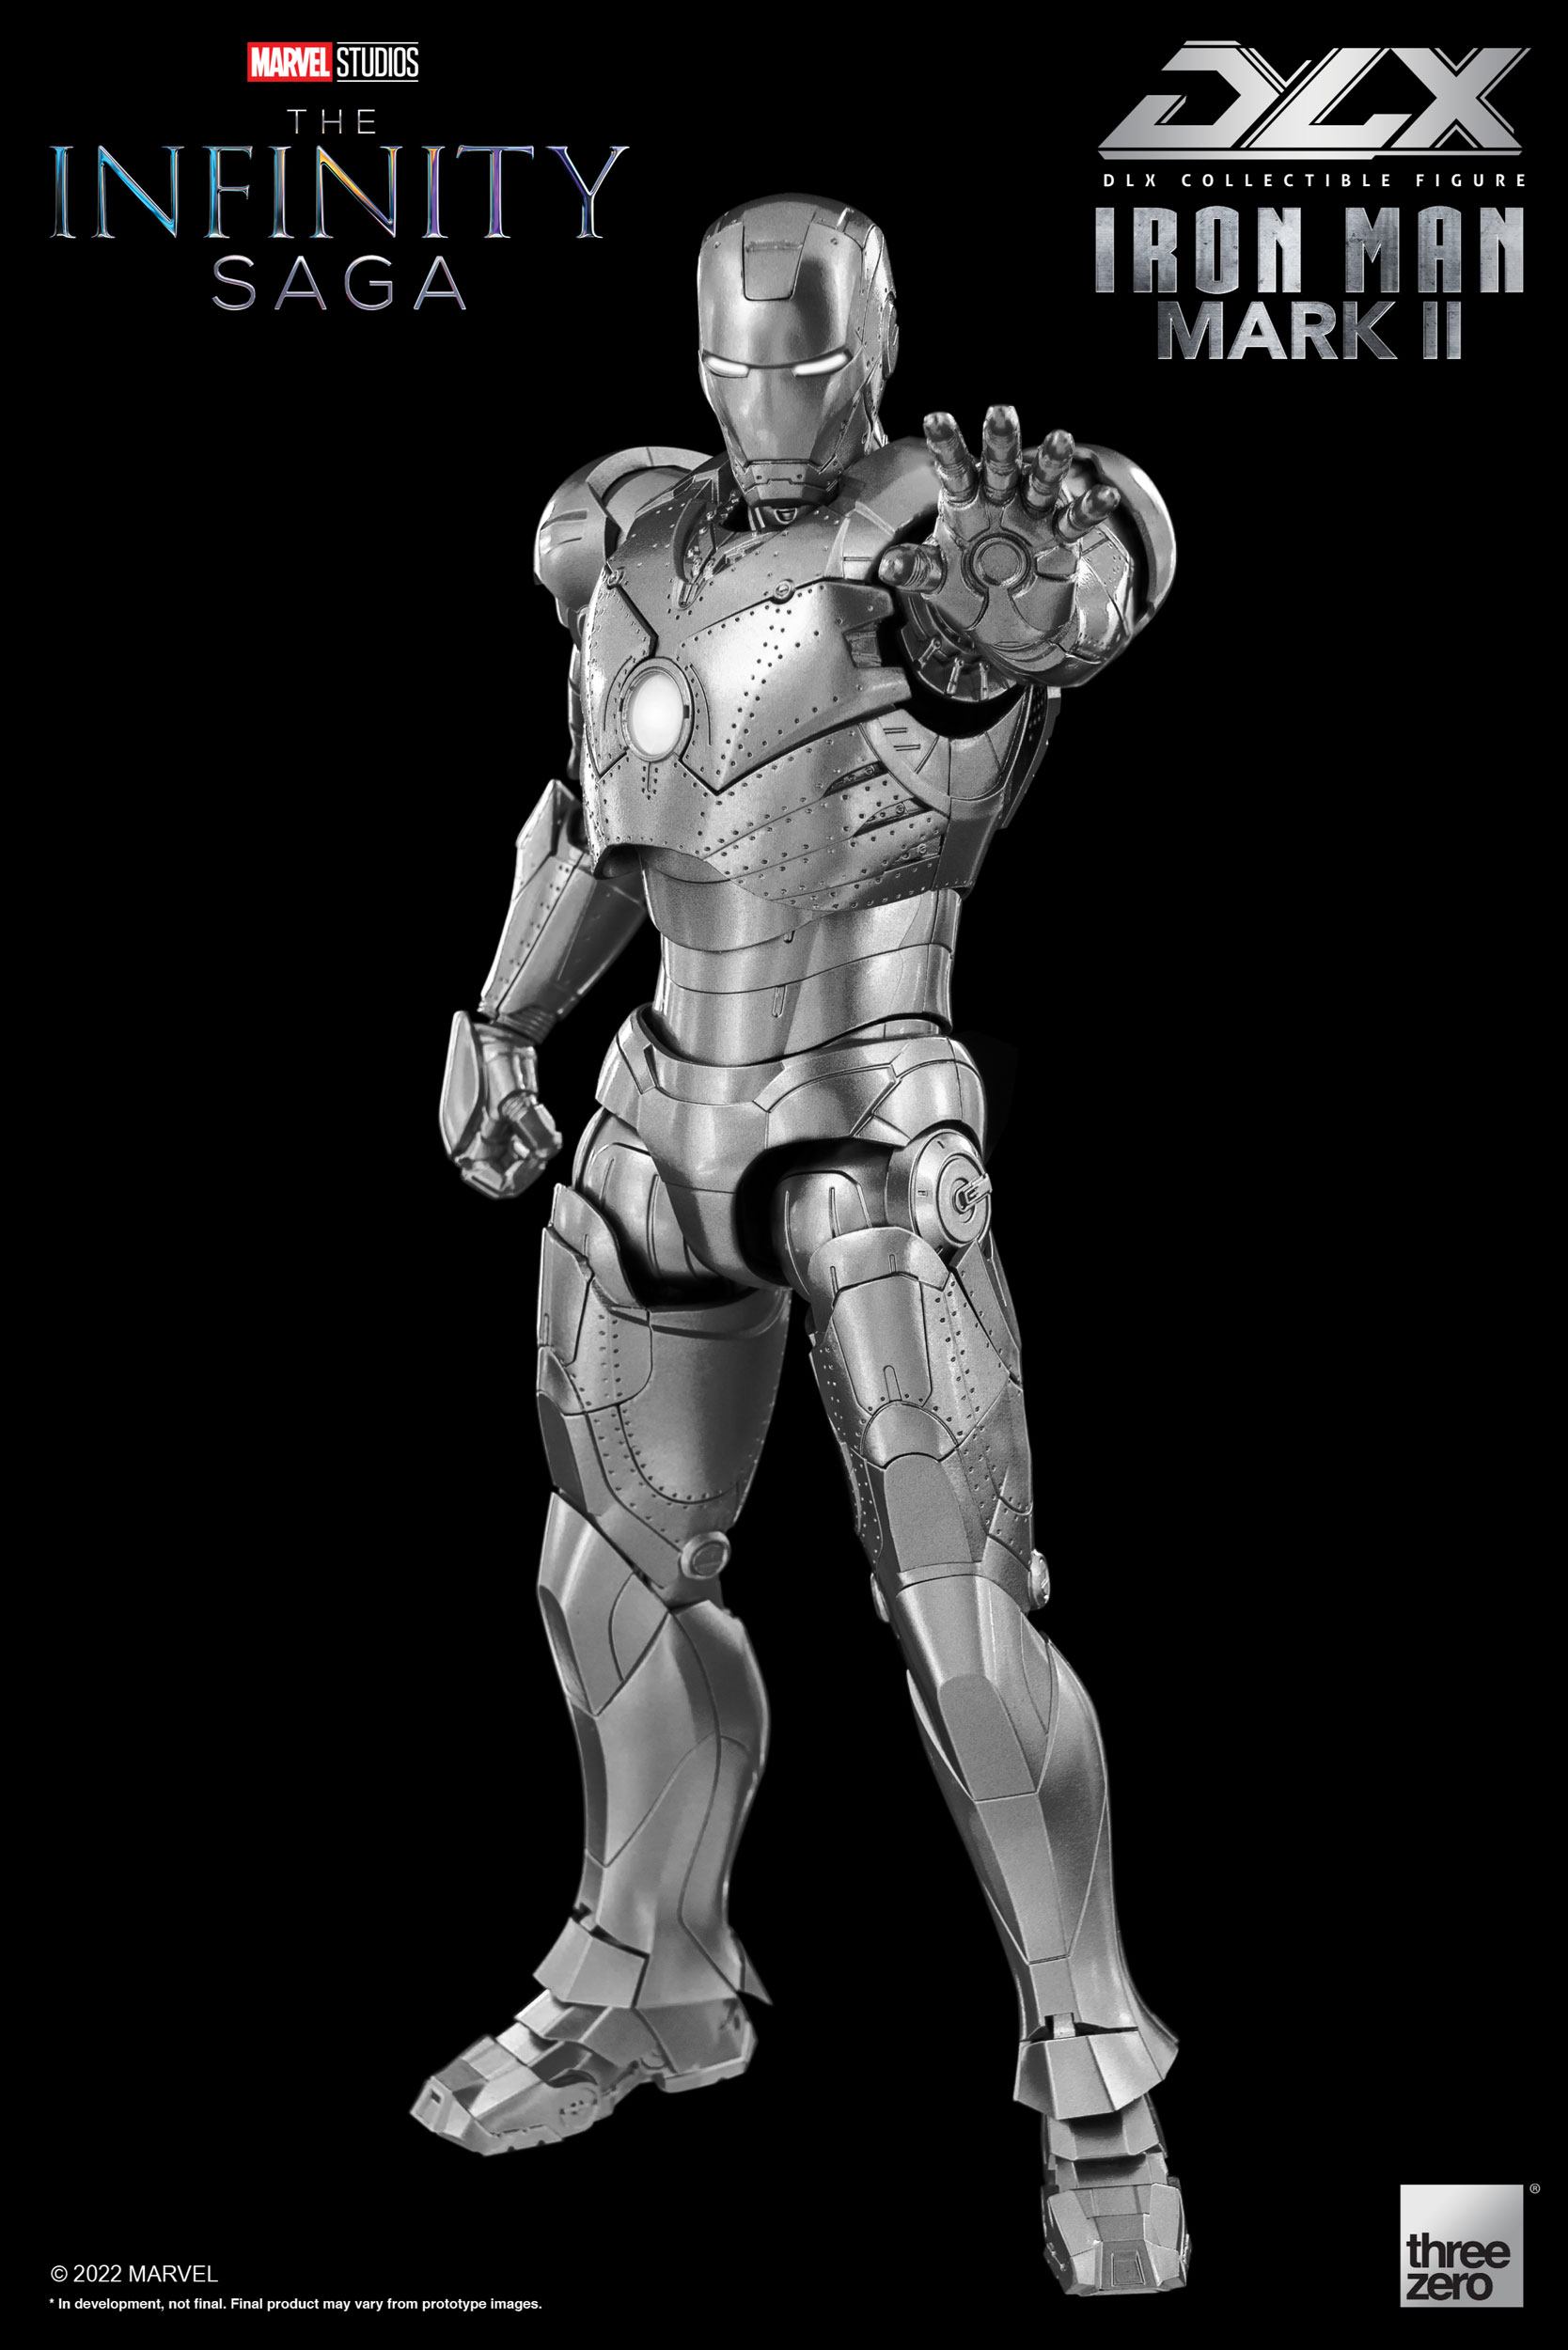 MARVEL - Iron Man Mark 3 DLX AF Infinity Saga - Figurine 17.5cm :  : Figurine Threezero Marvel